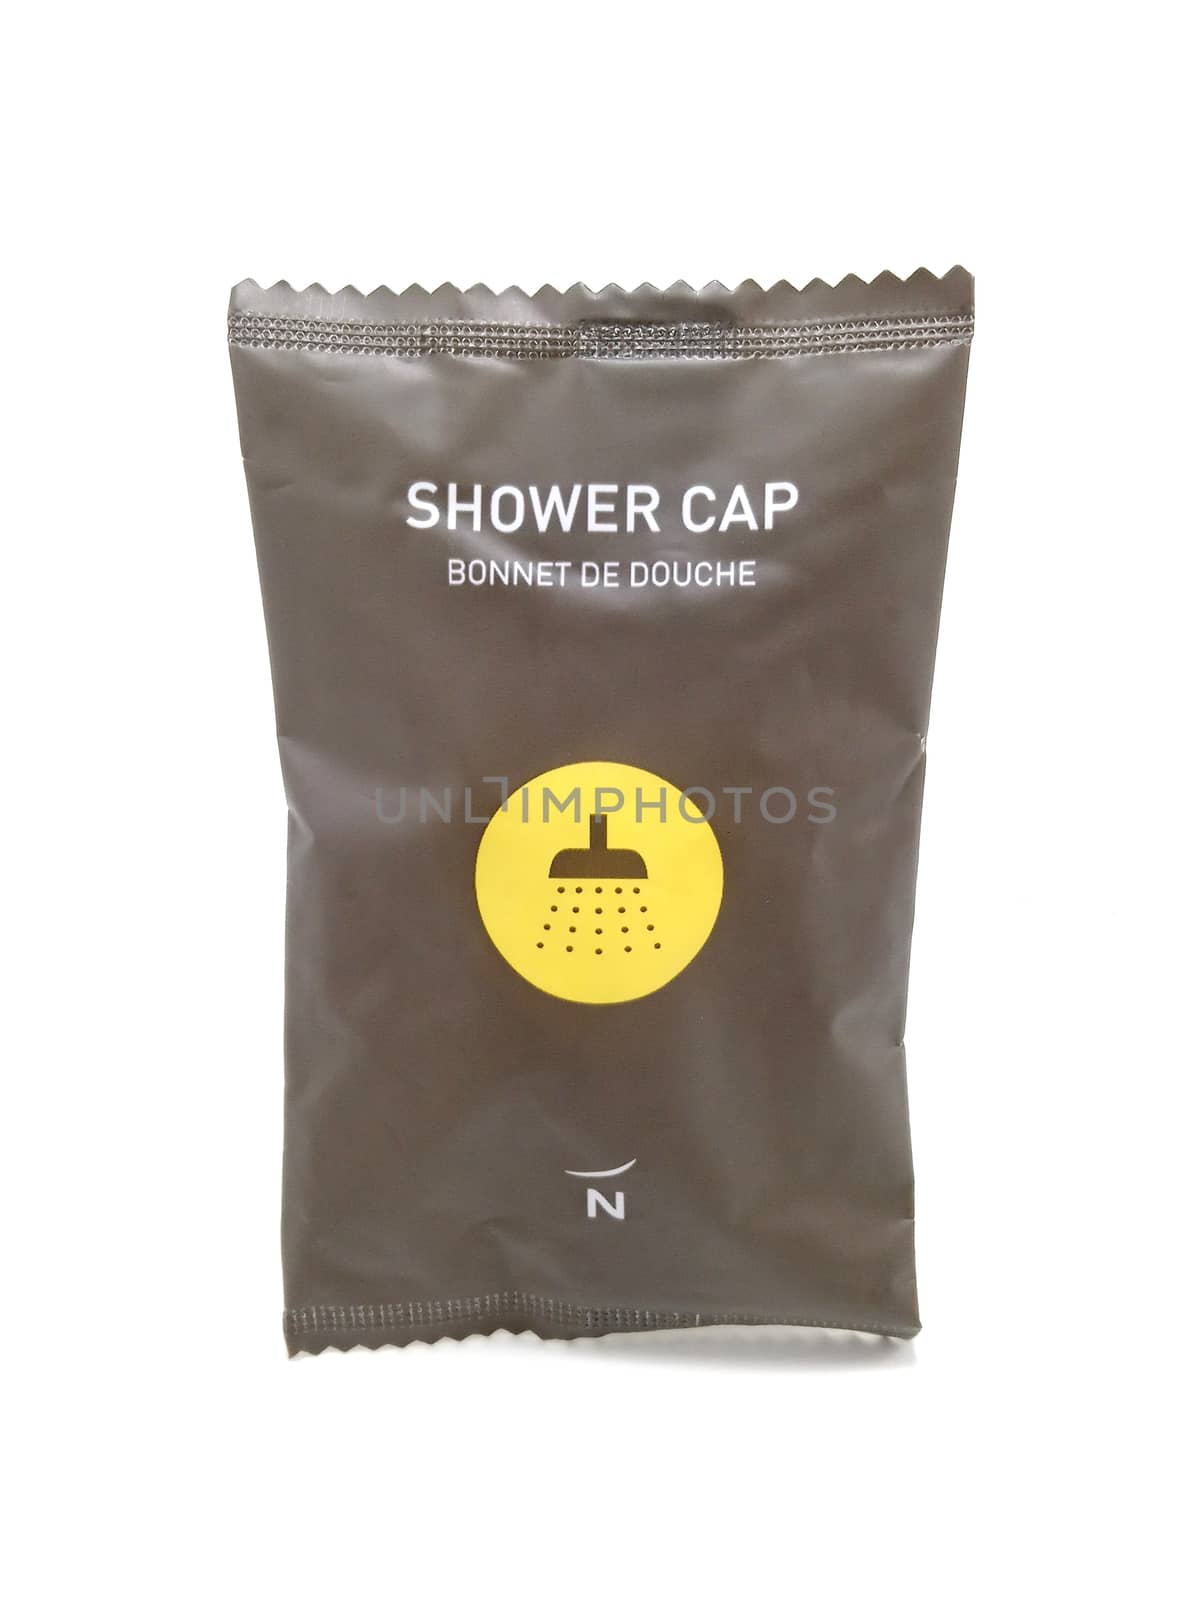 Novotel shower cap in Manila, Philippines by imwaltersy